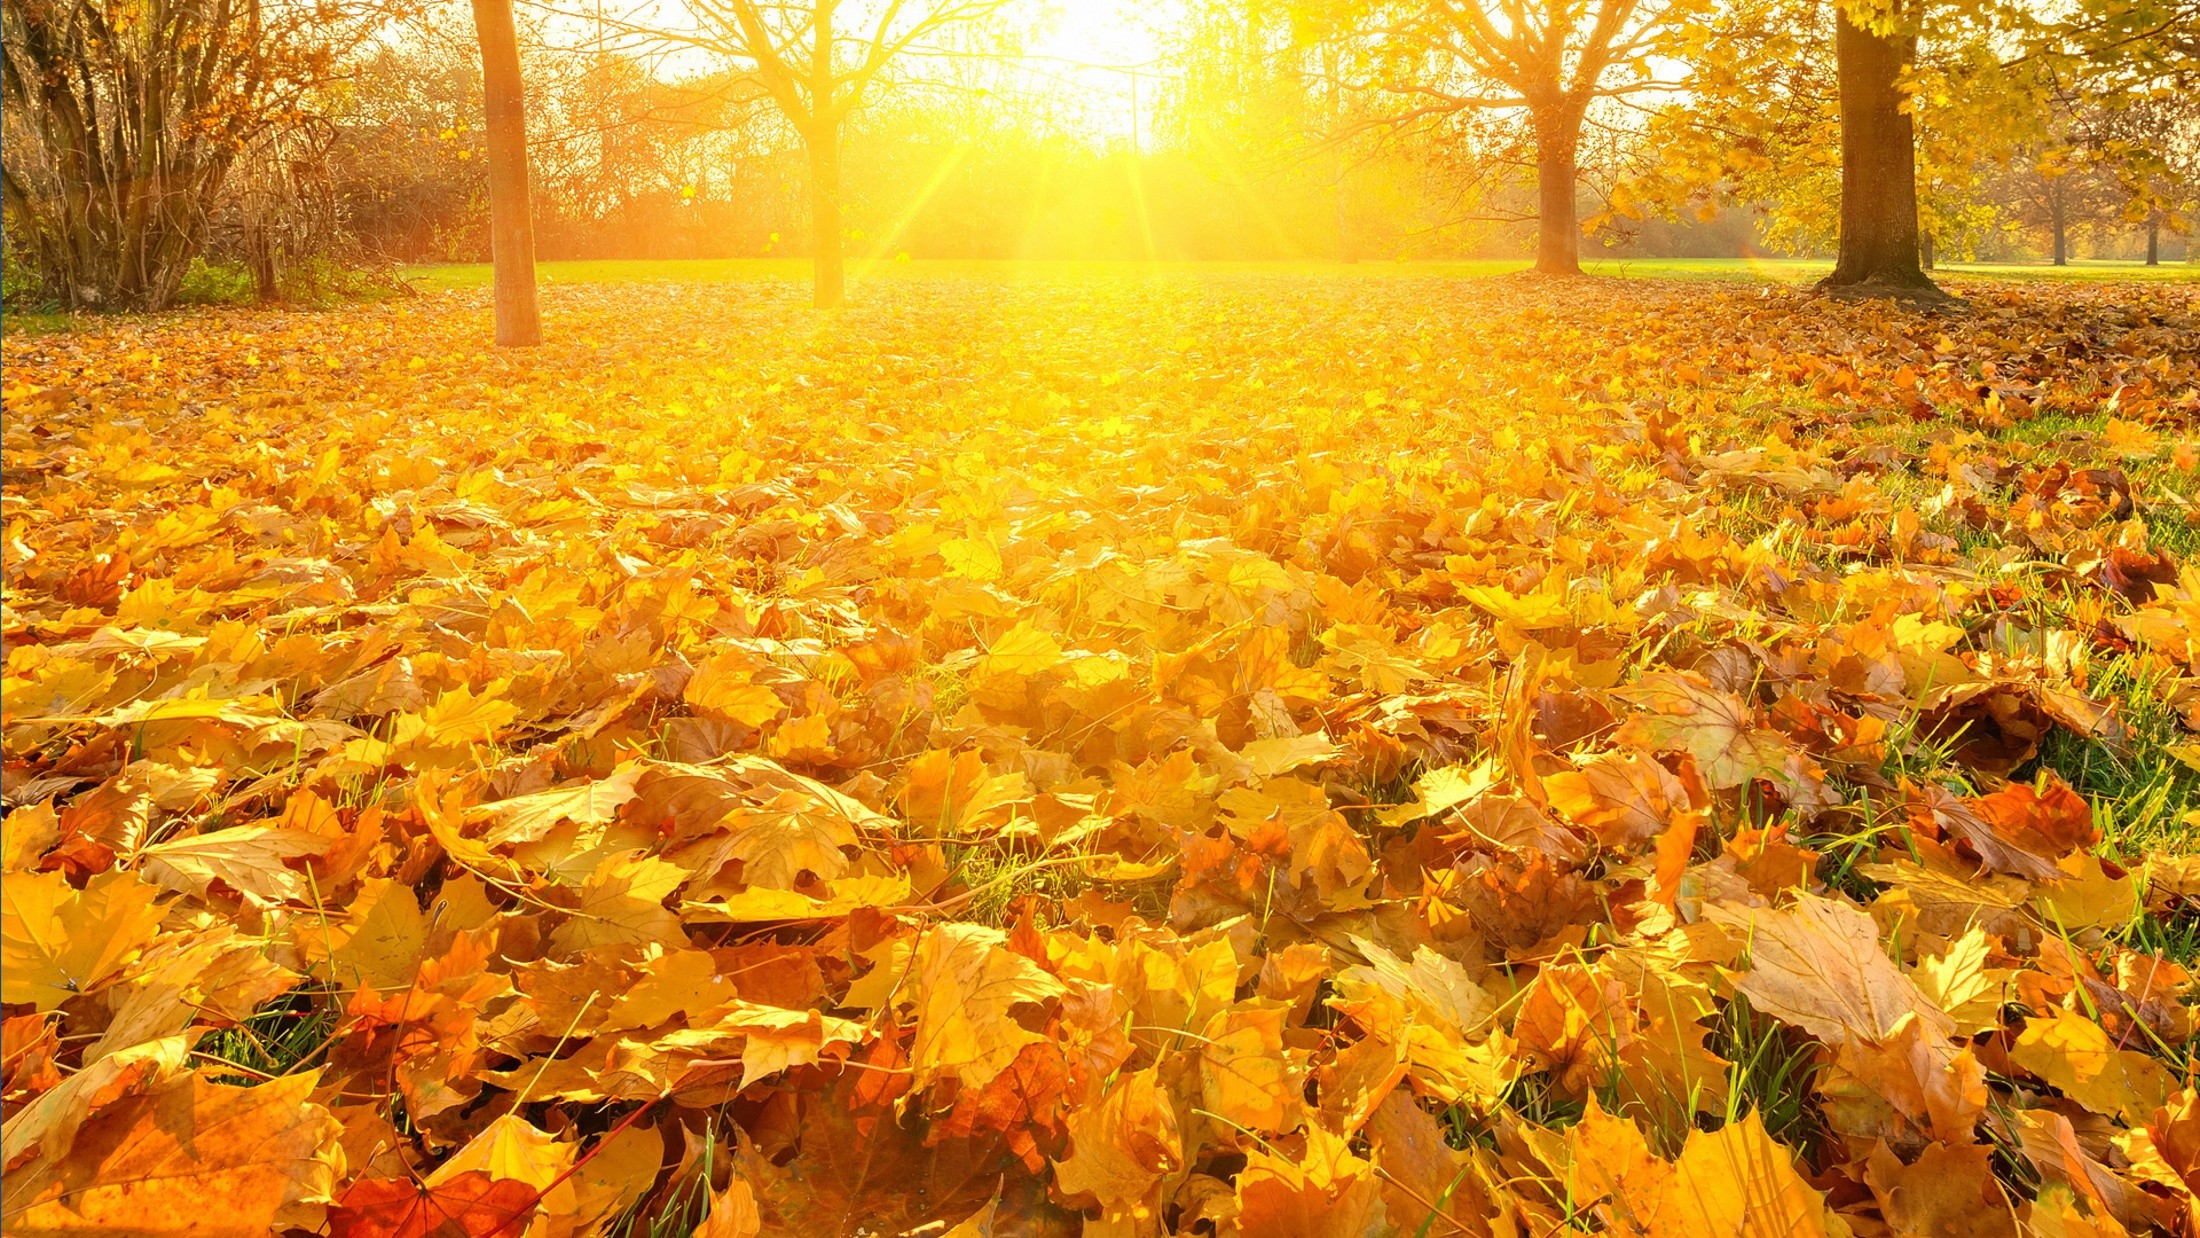 General 2200x1238 park leaves fall fallen leaves outdoors plants sunlight